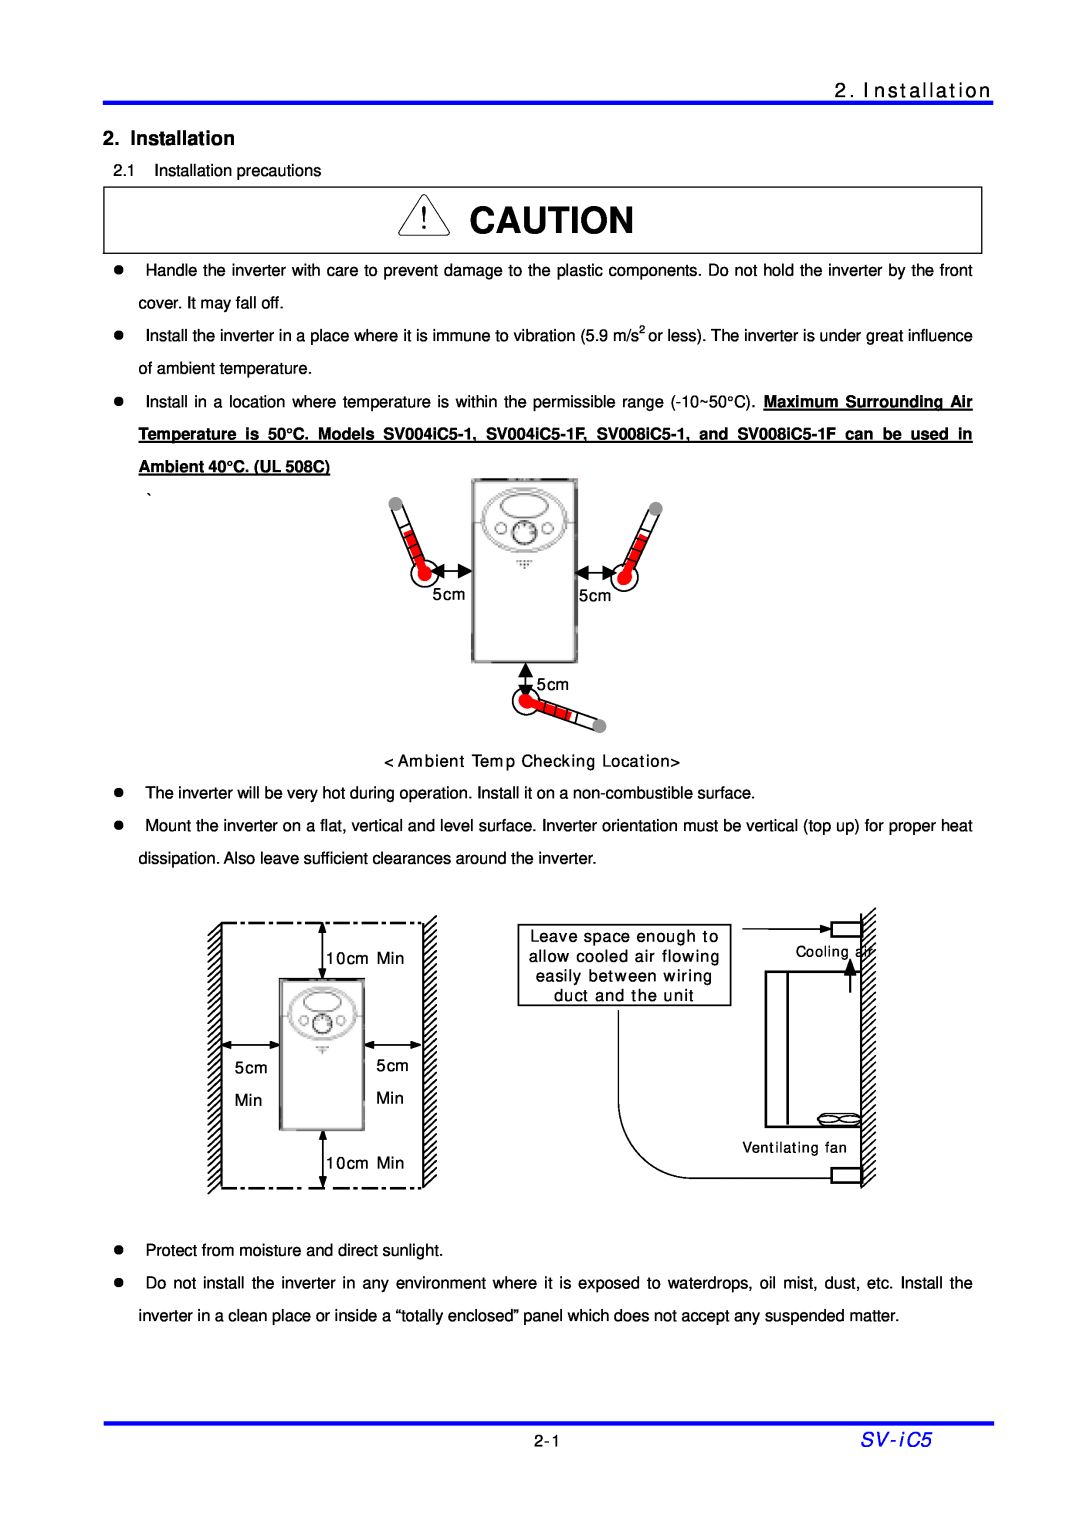 LG Electronics SV-iC5 Series manual Installation, Ambient 40C. UL 508C 